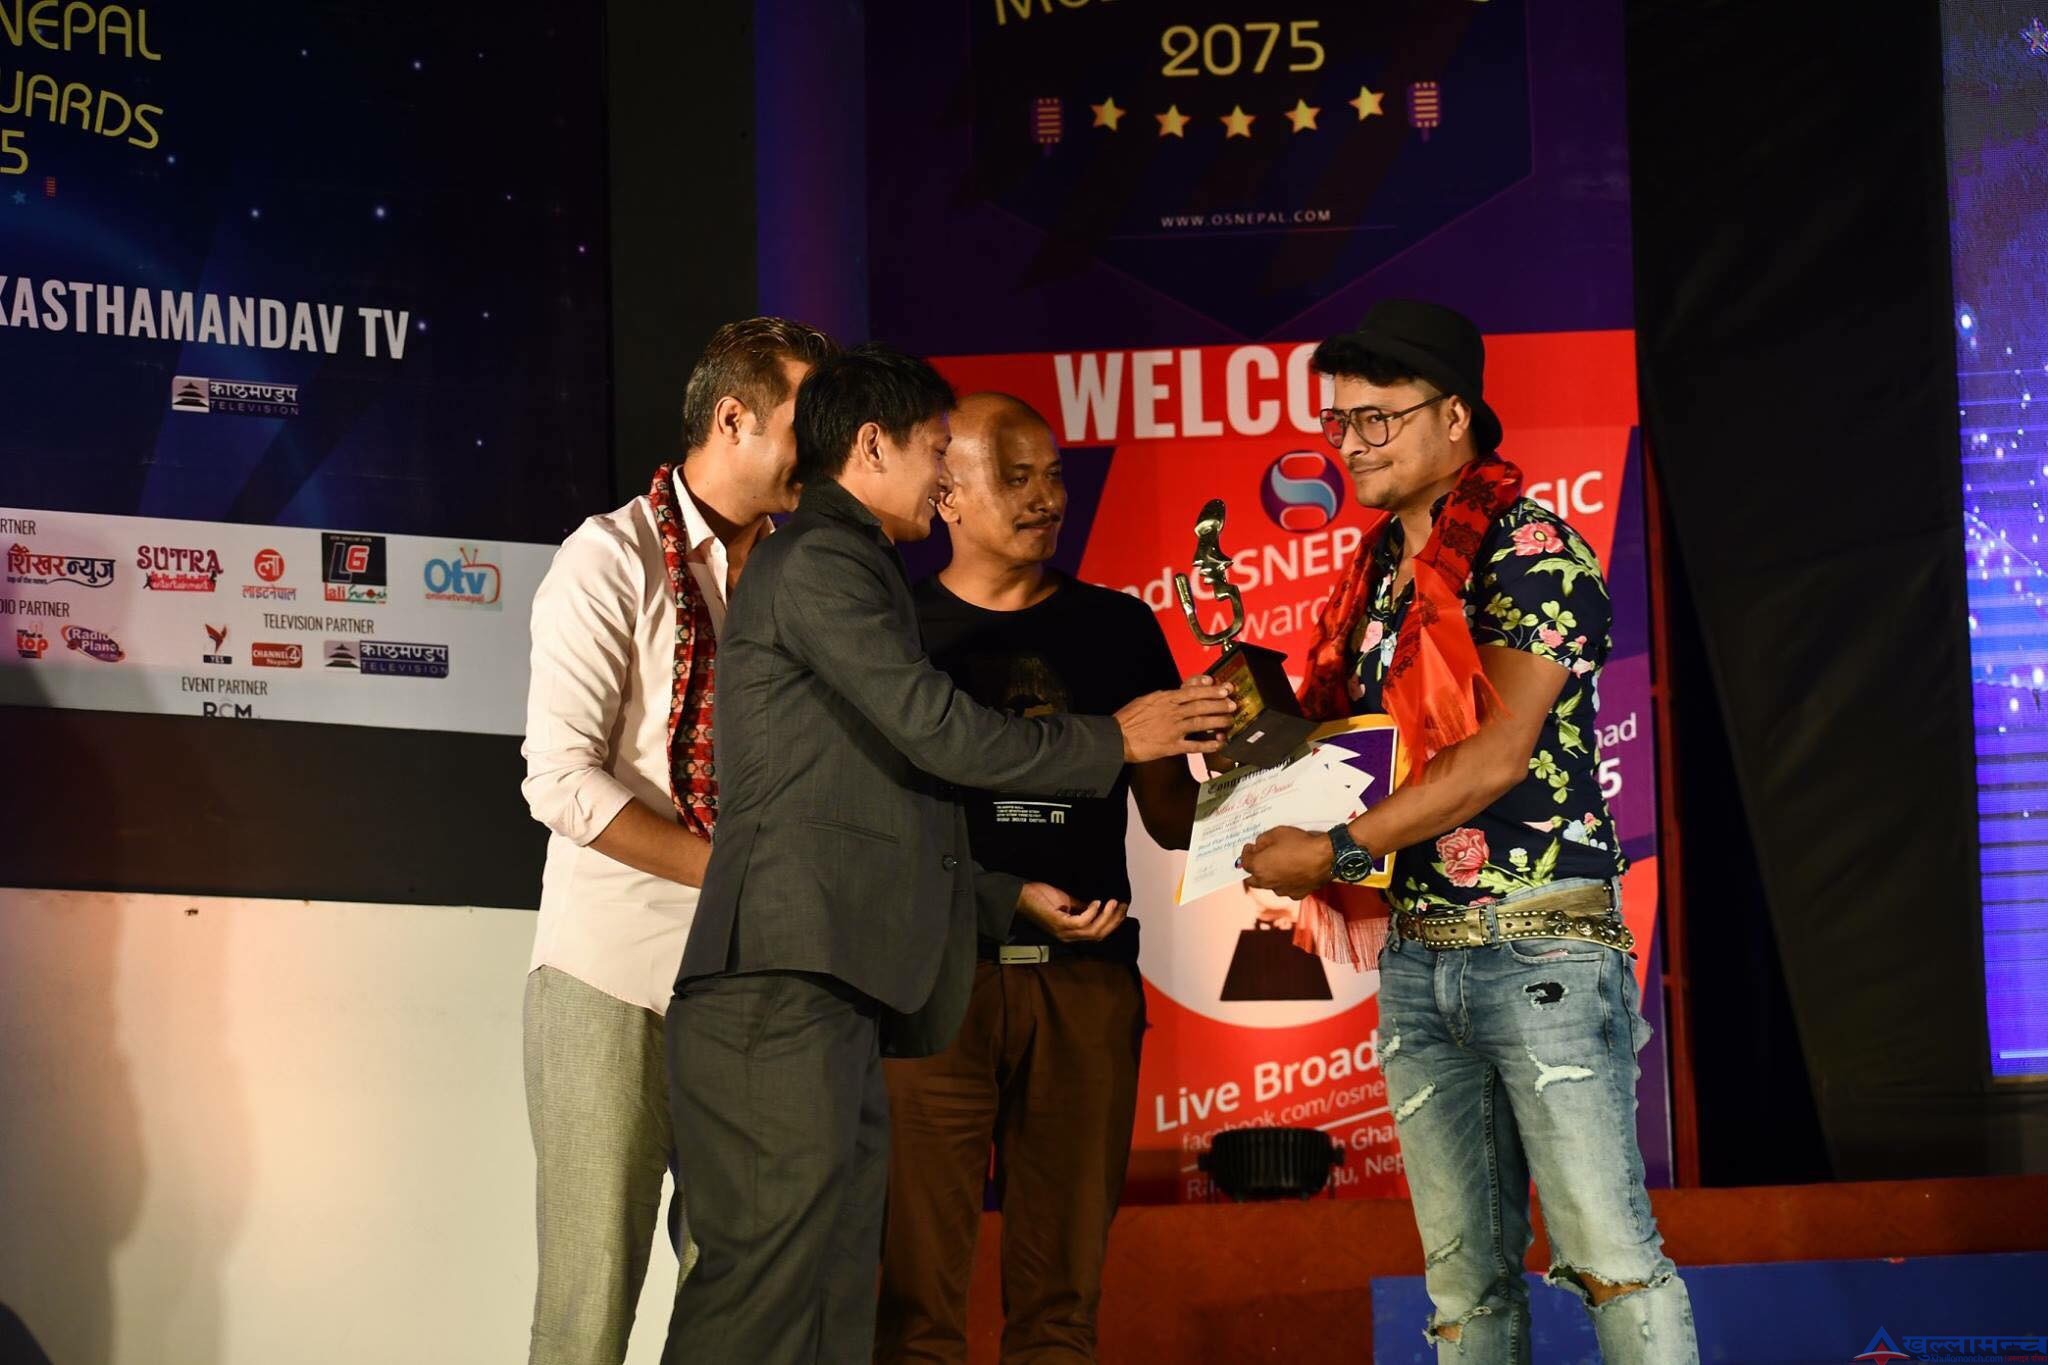 ओएस नेपाल म्युजिक अवार्ड, पृथ्बी राज प्रसाईं पुरुषतर्फ बेस्ट पप मोडल विजेता